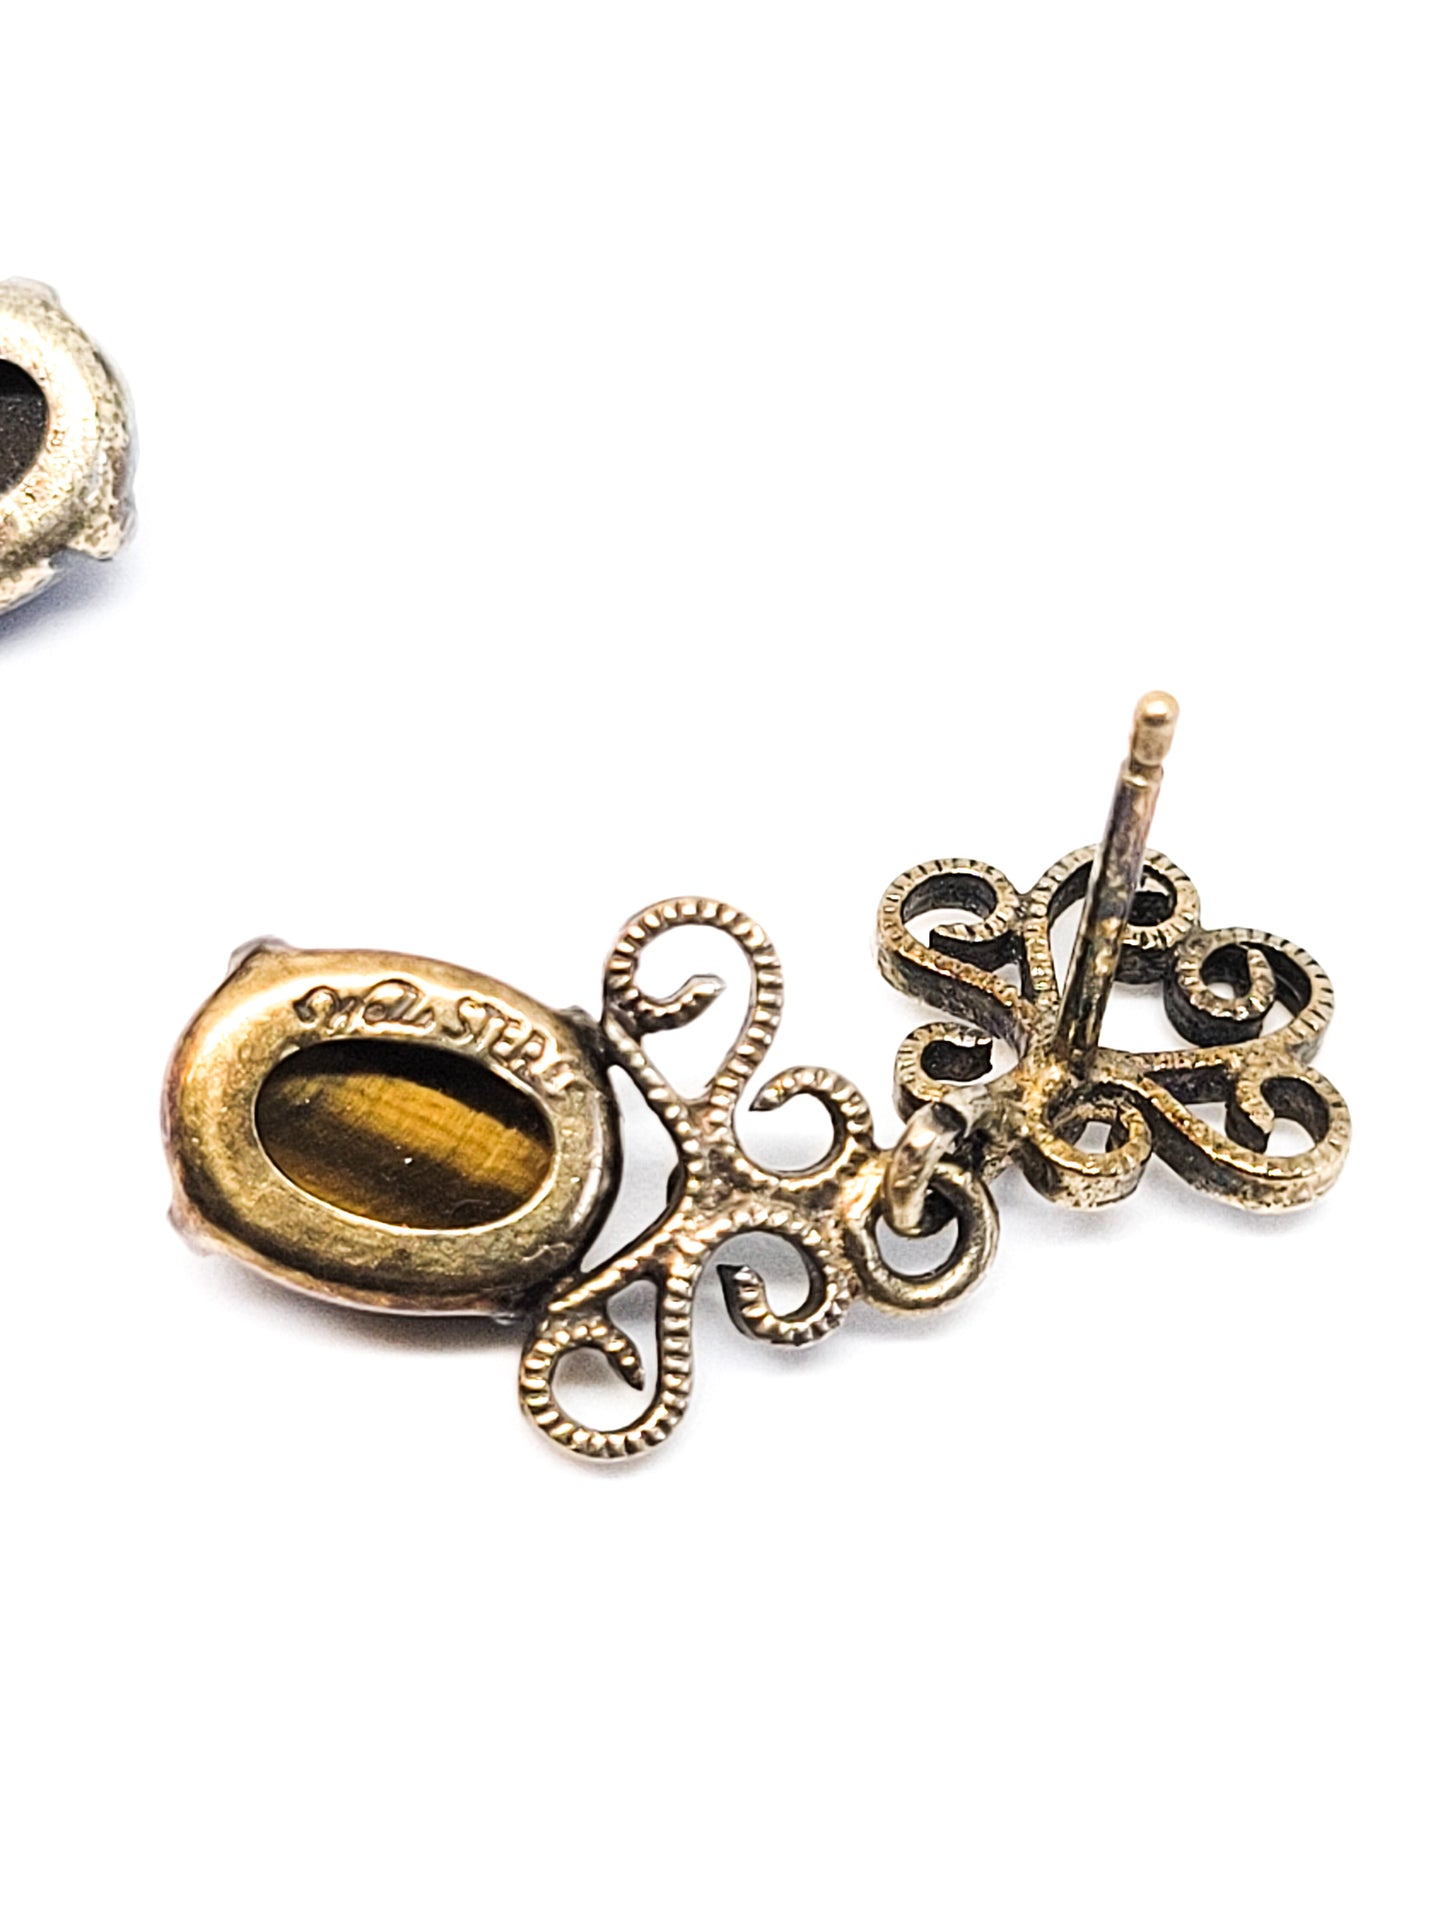 Wells signed gold over sterling silver vermeil Tiger's eye drop vintage earrings 925